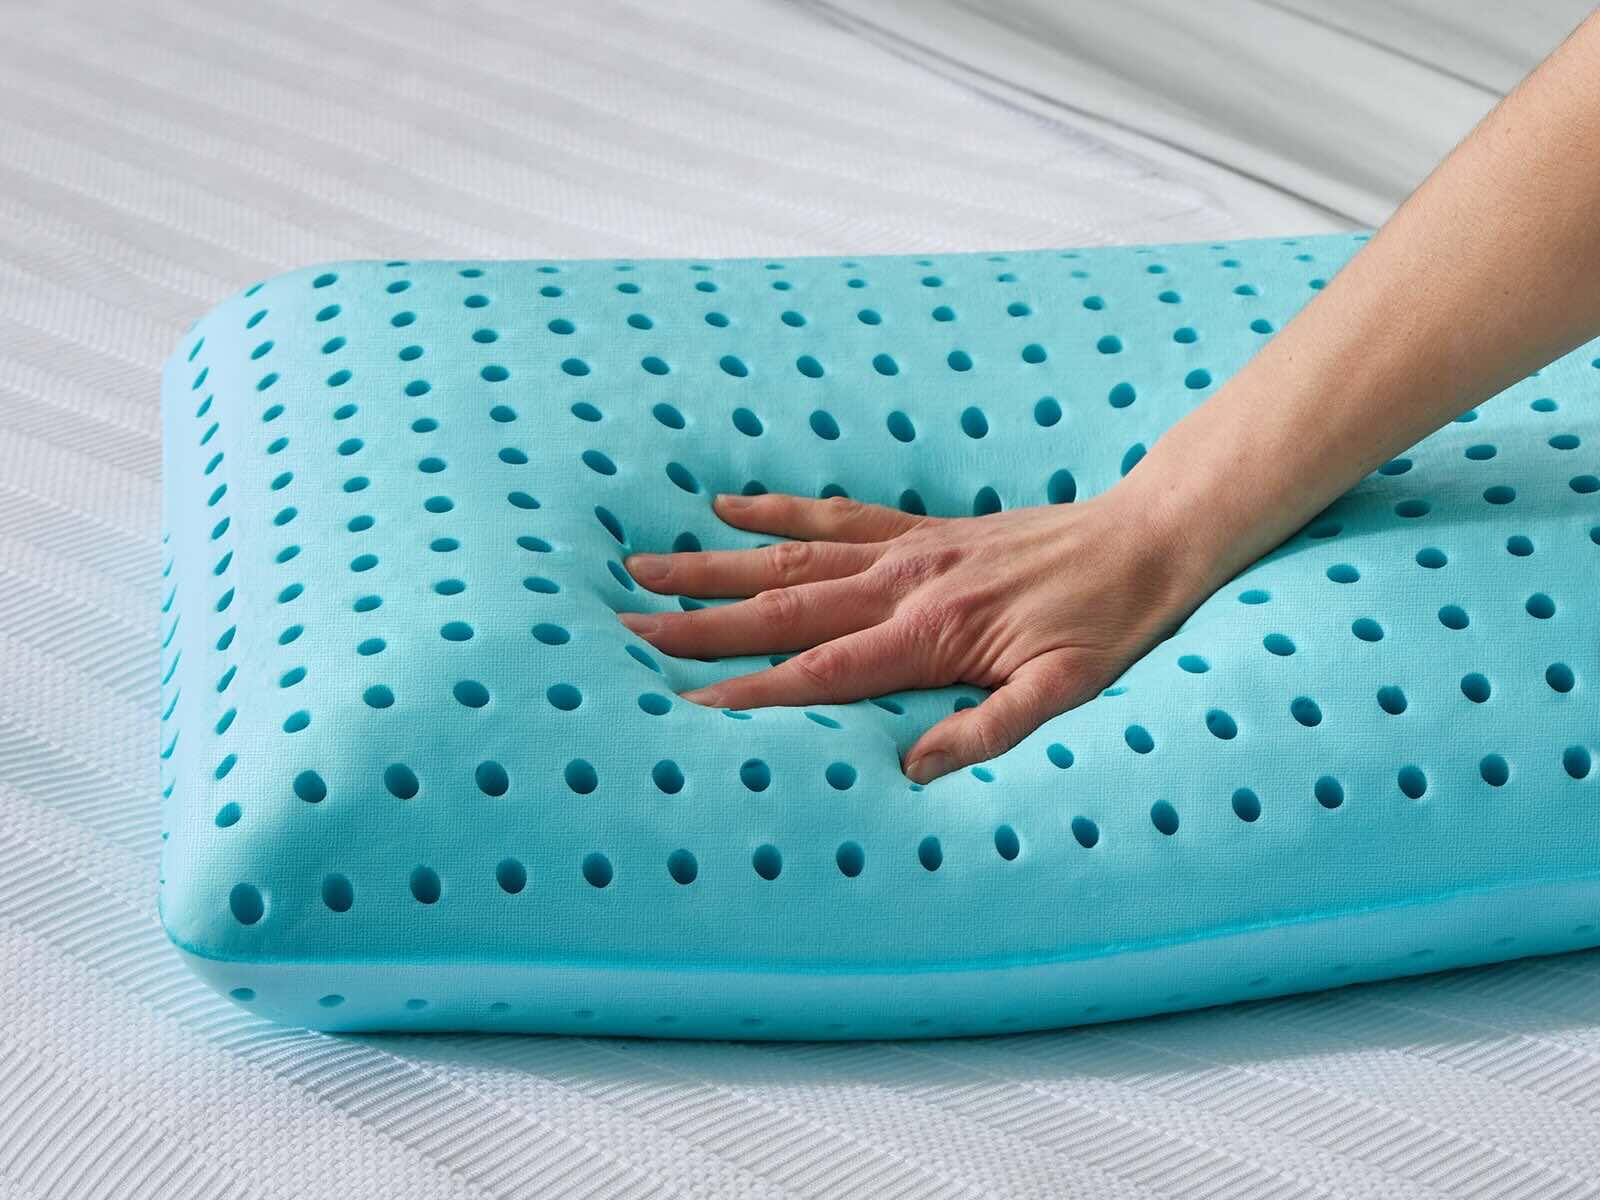 Pharmedoc High Density Memory Foam Lumbar Support Cushion For